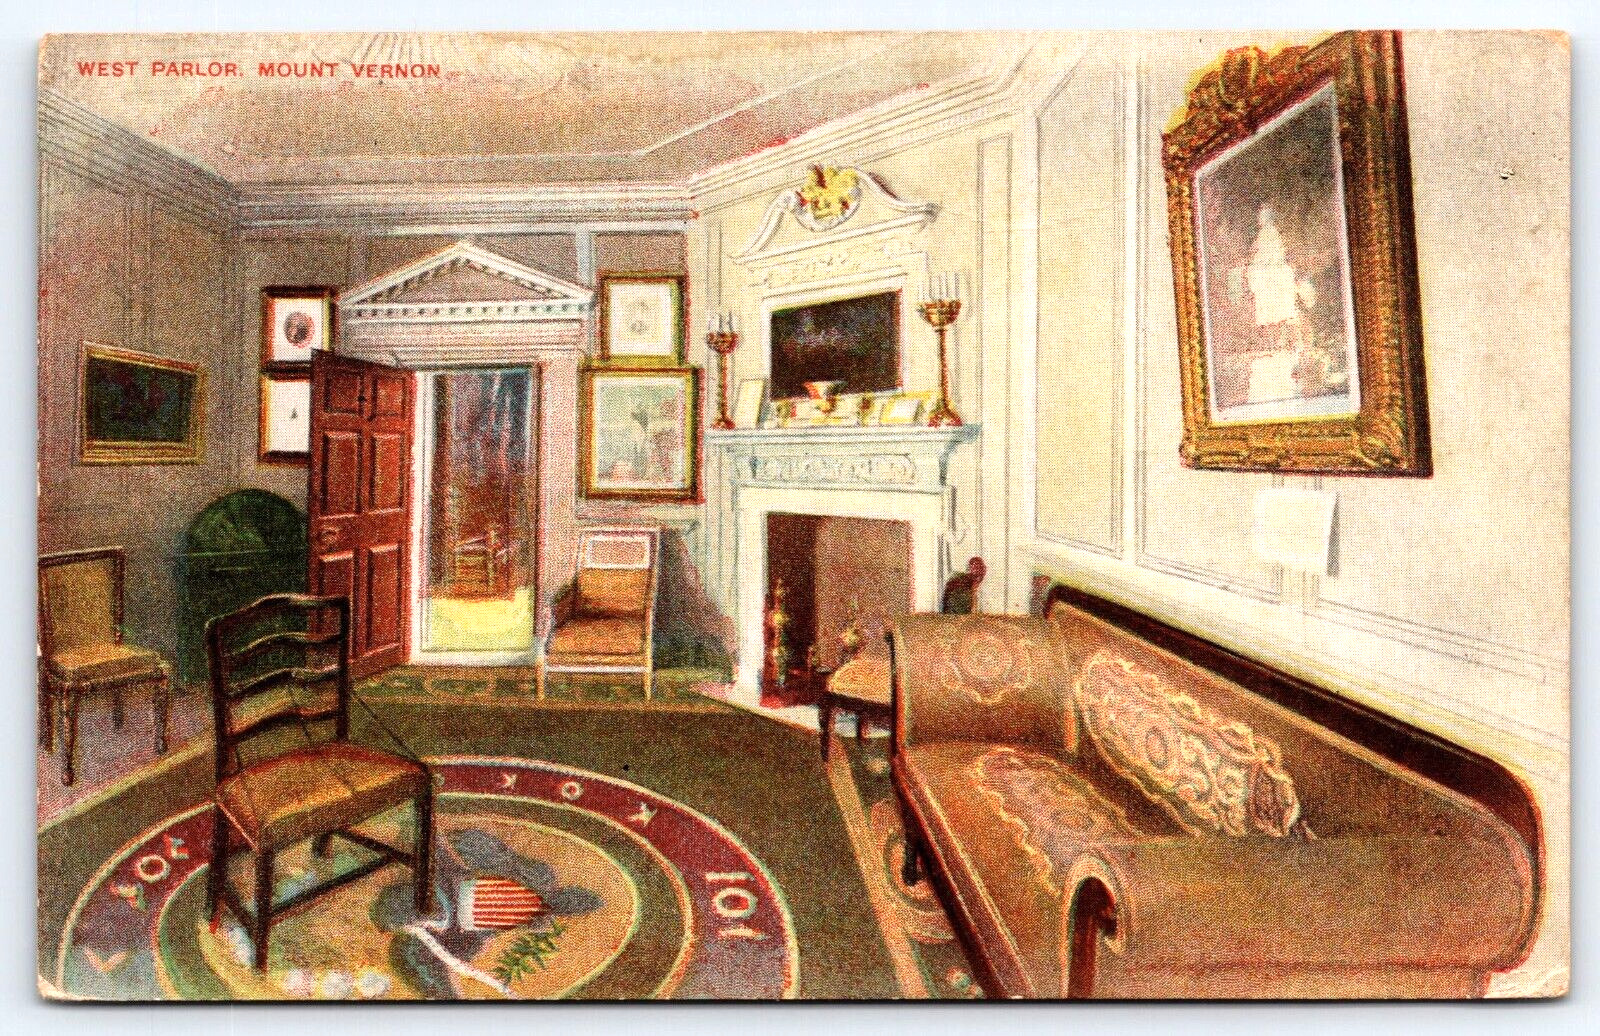 Original Old Vintage Postcard West Parlor George Washington Mount Vernon, VA USA